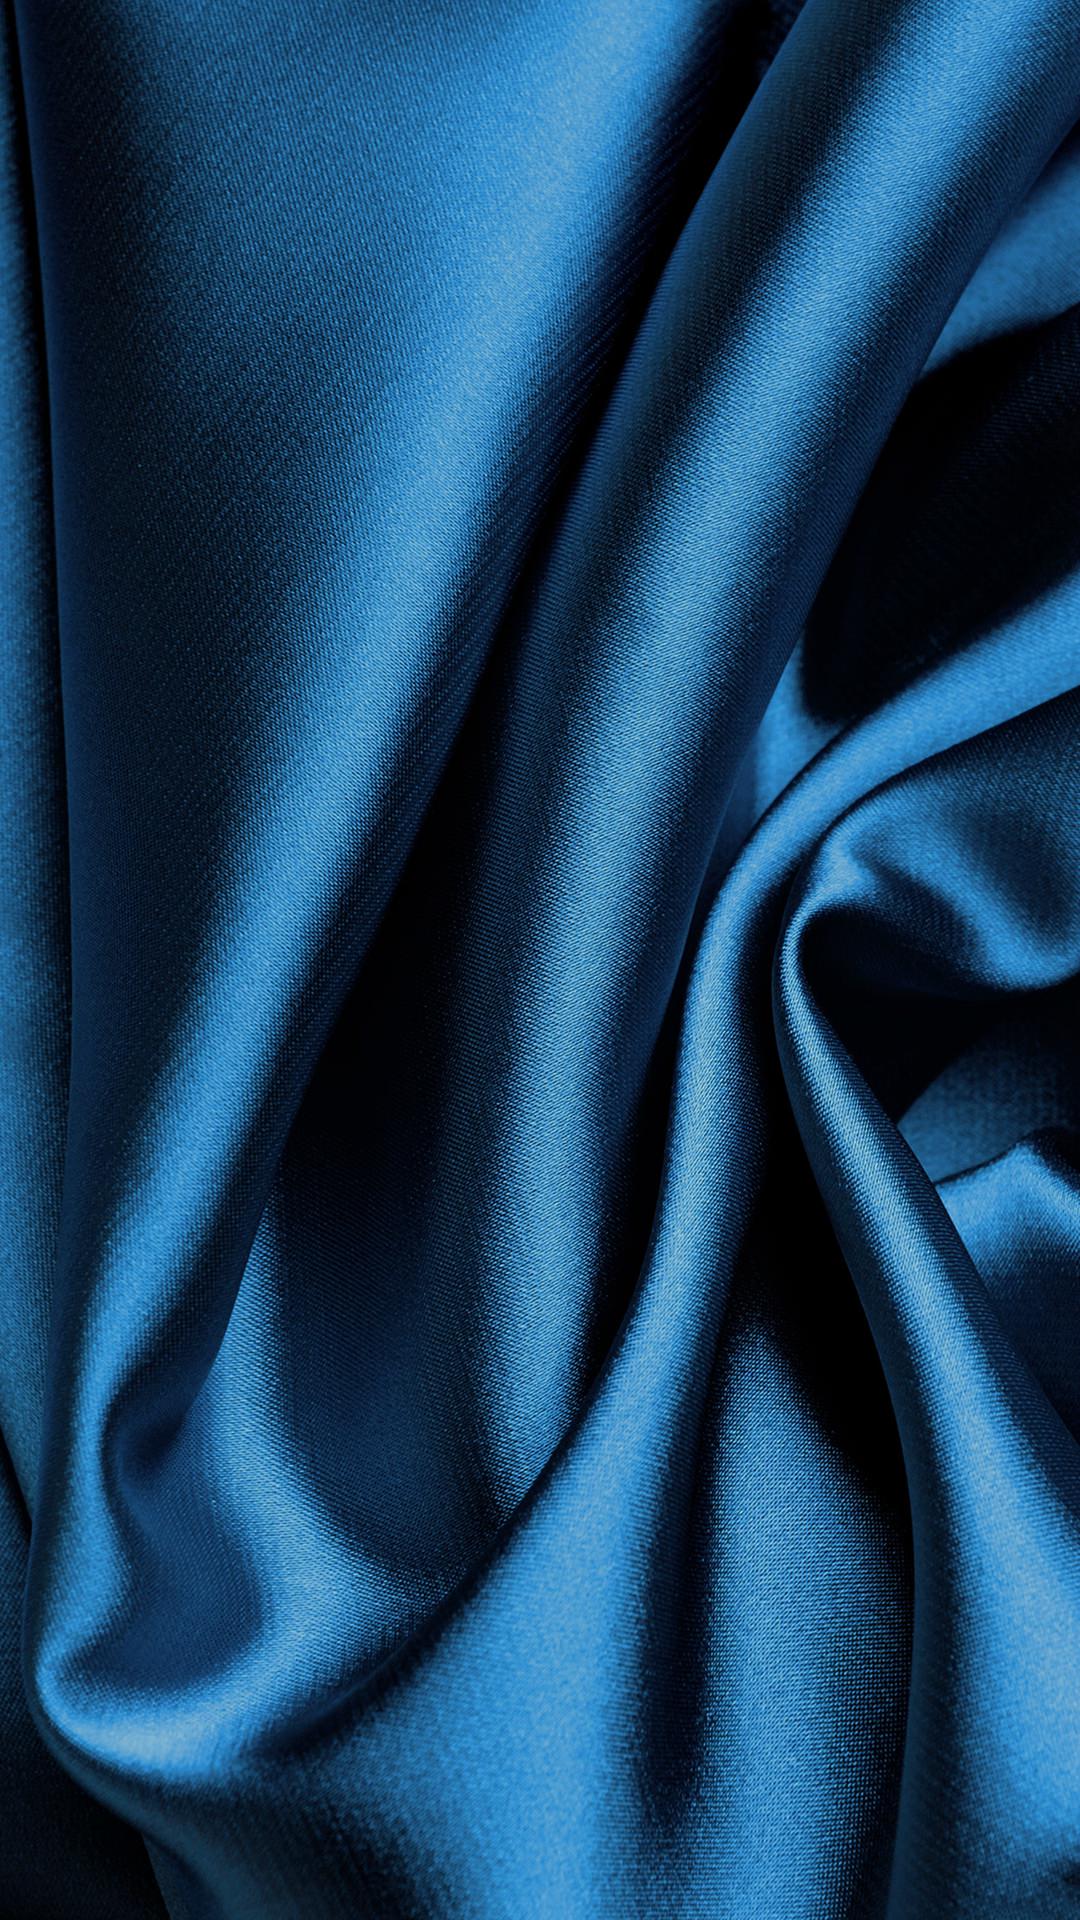 26 Silk Textures Backgrounds Patterns Design Trends Premium Psd 